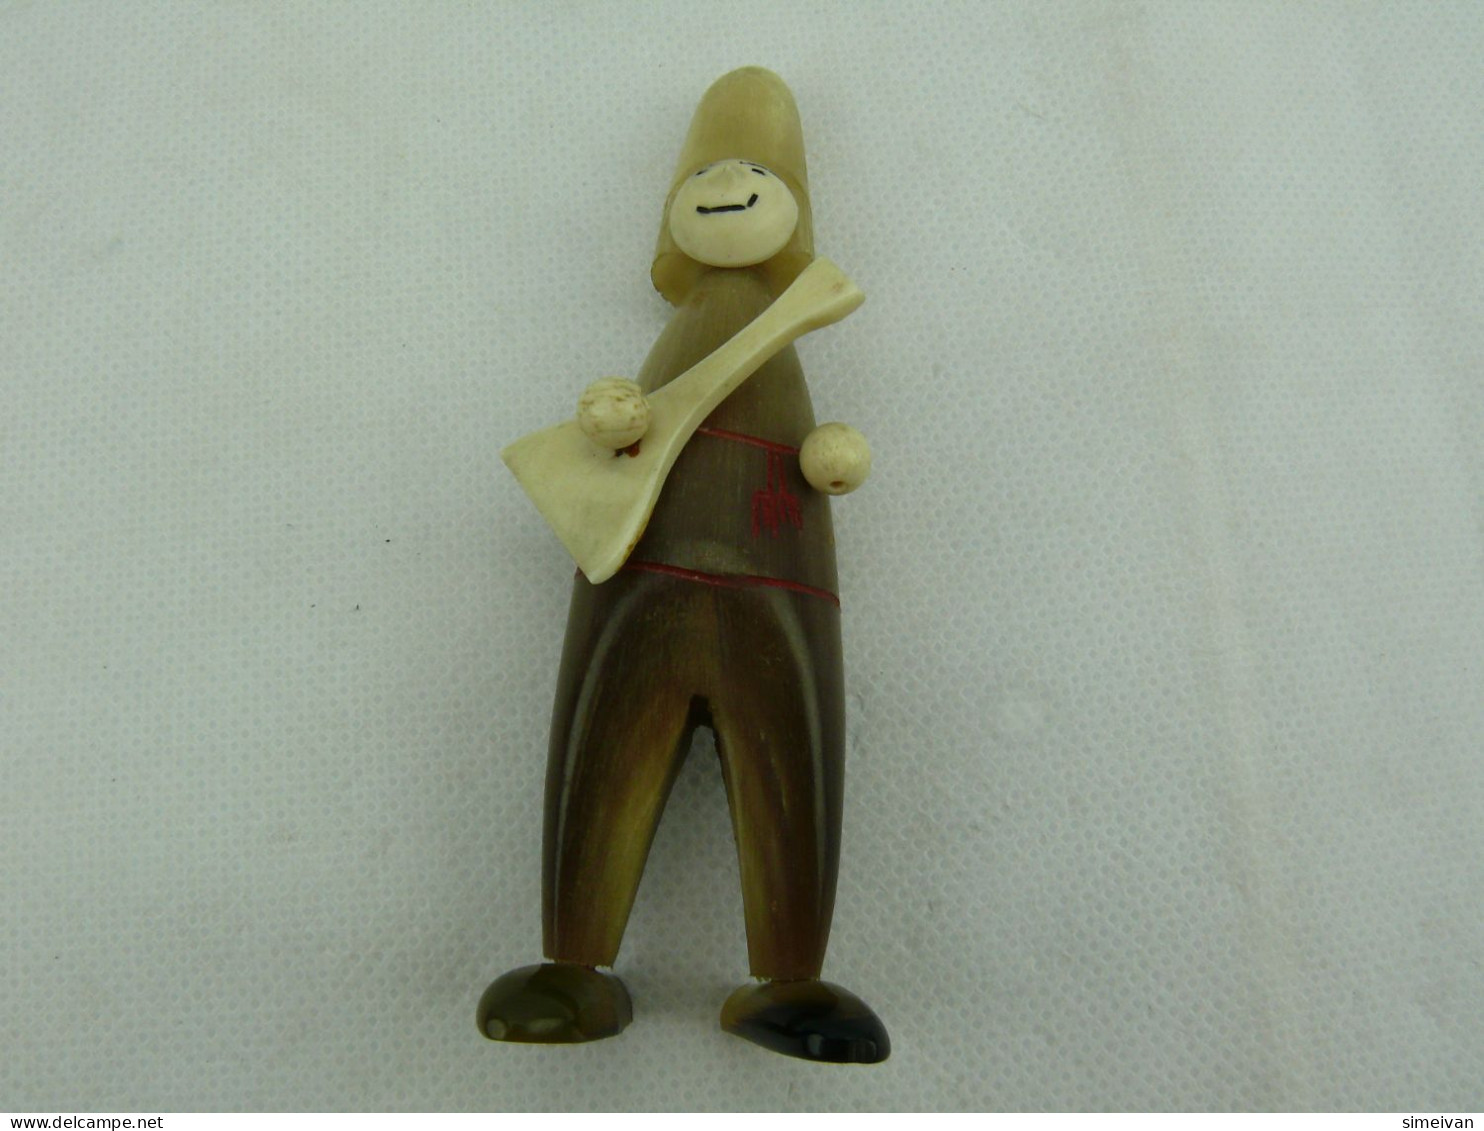 Beautiful Decorative Figurine of a Guitarist Made of Horn 10 cm #2366